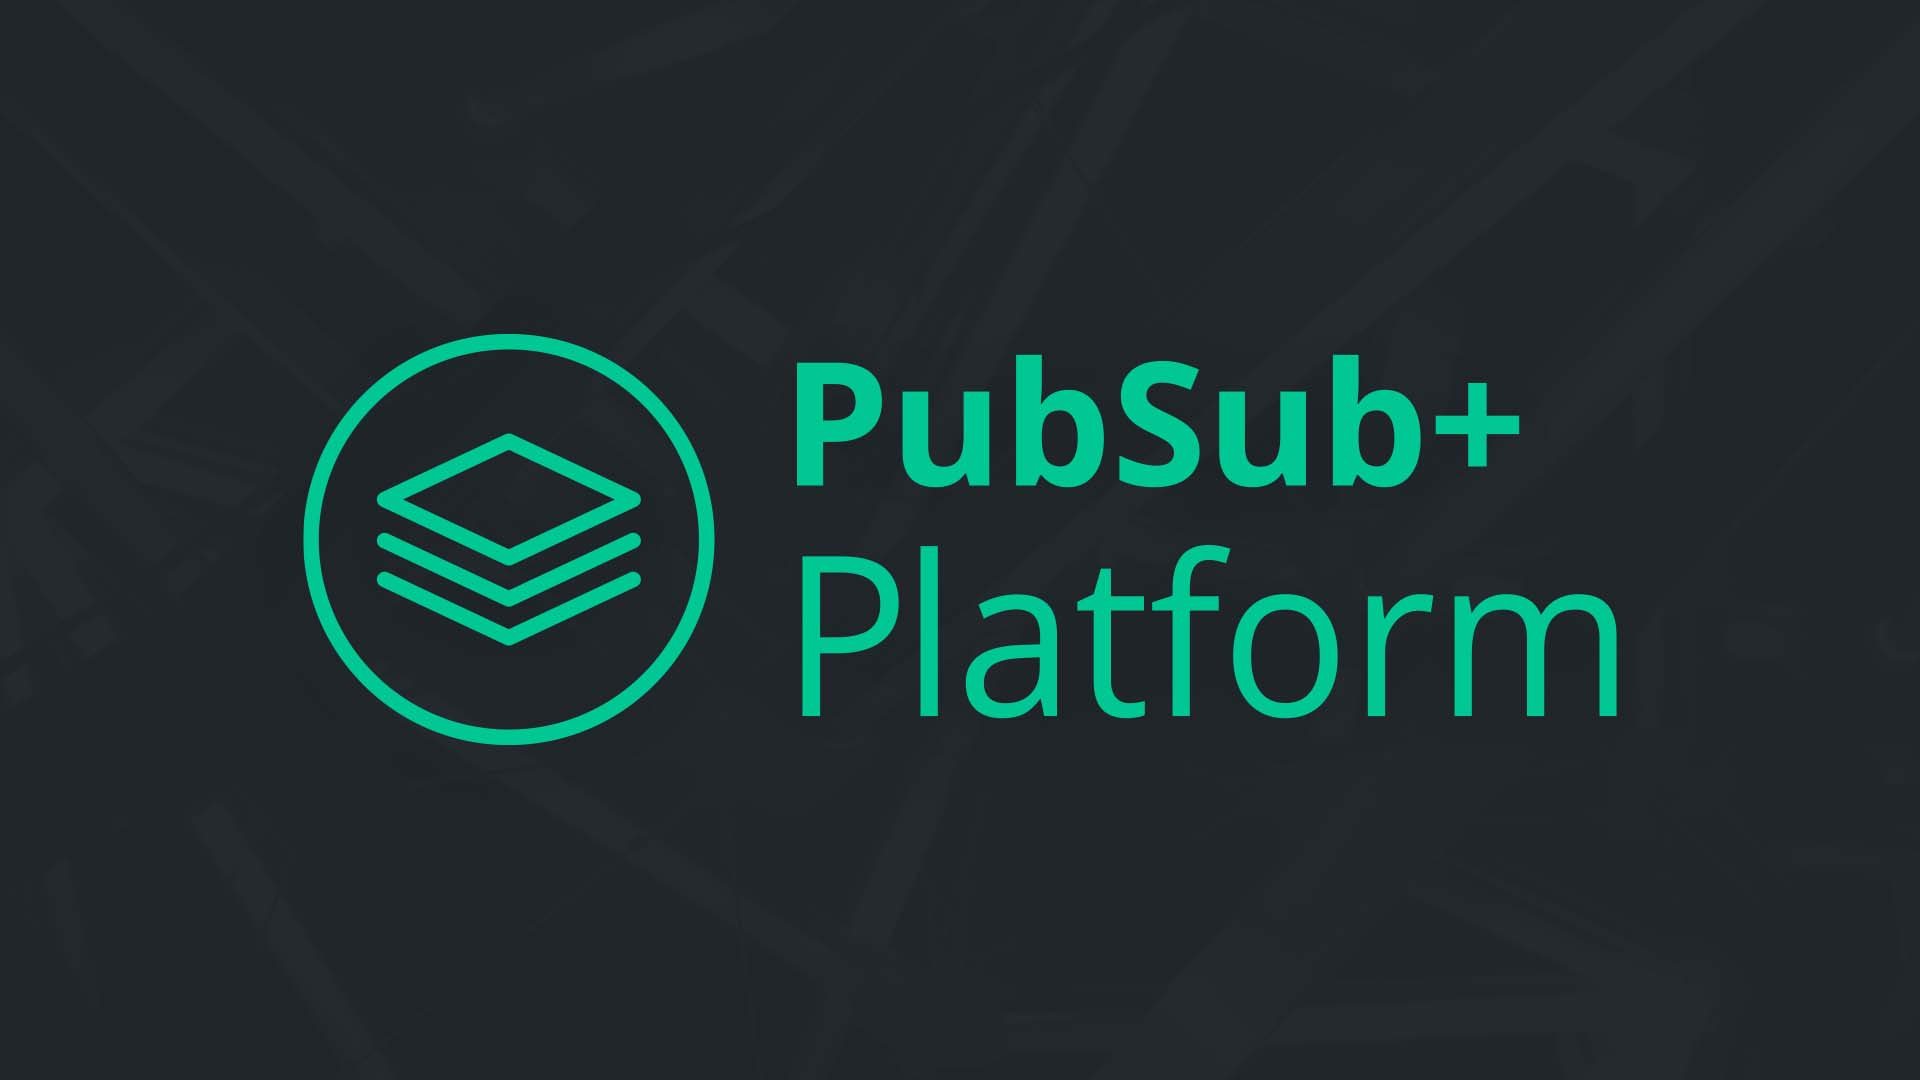 See PubSub+ Platform in Action